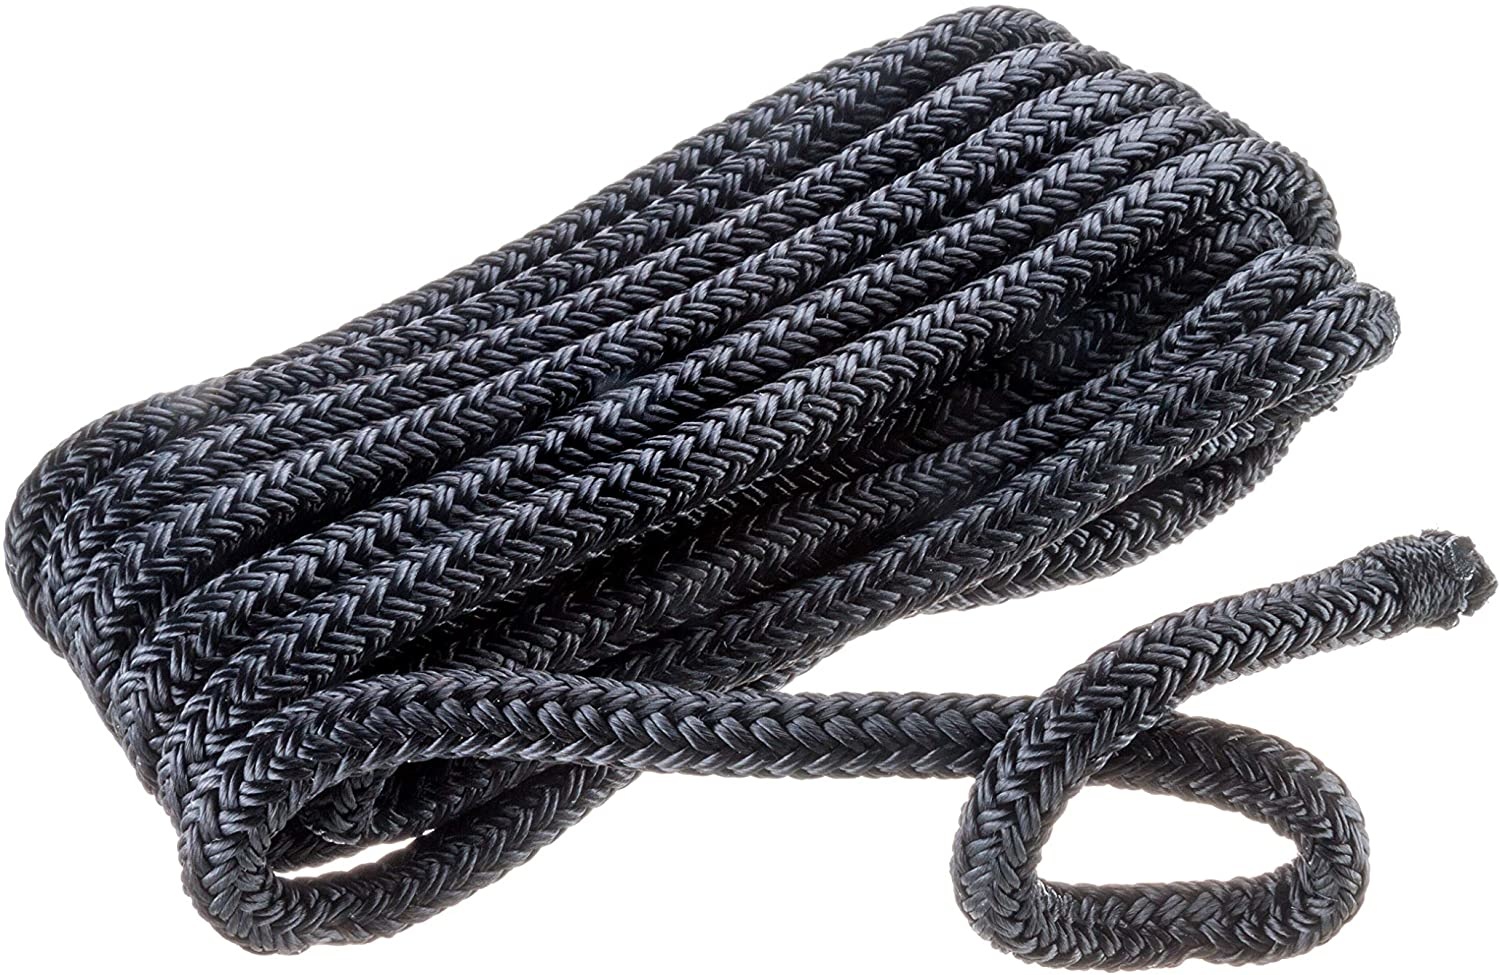 Seachoice- double braided nylon rope 3/8 black per foot 47090